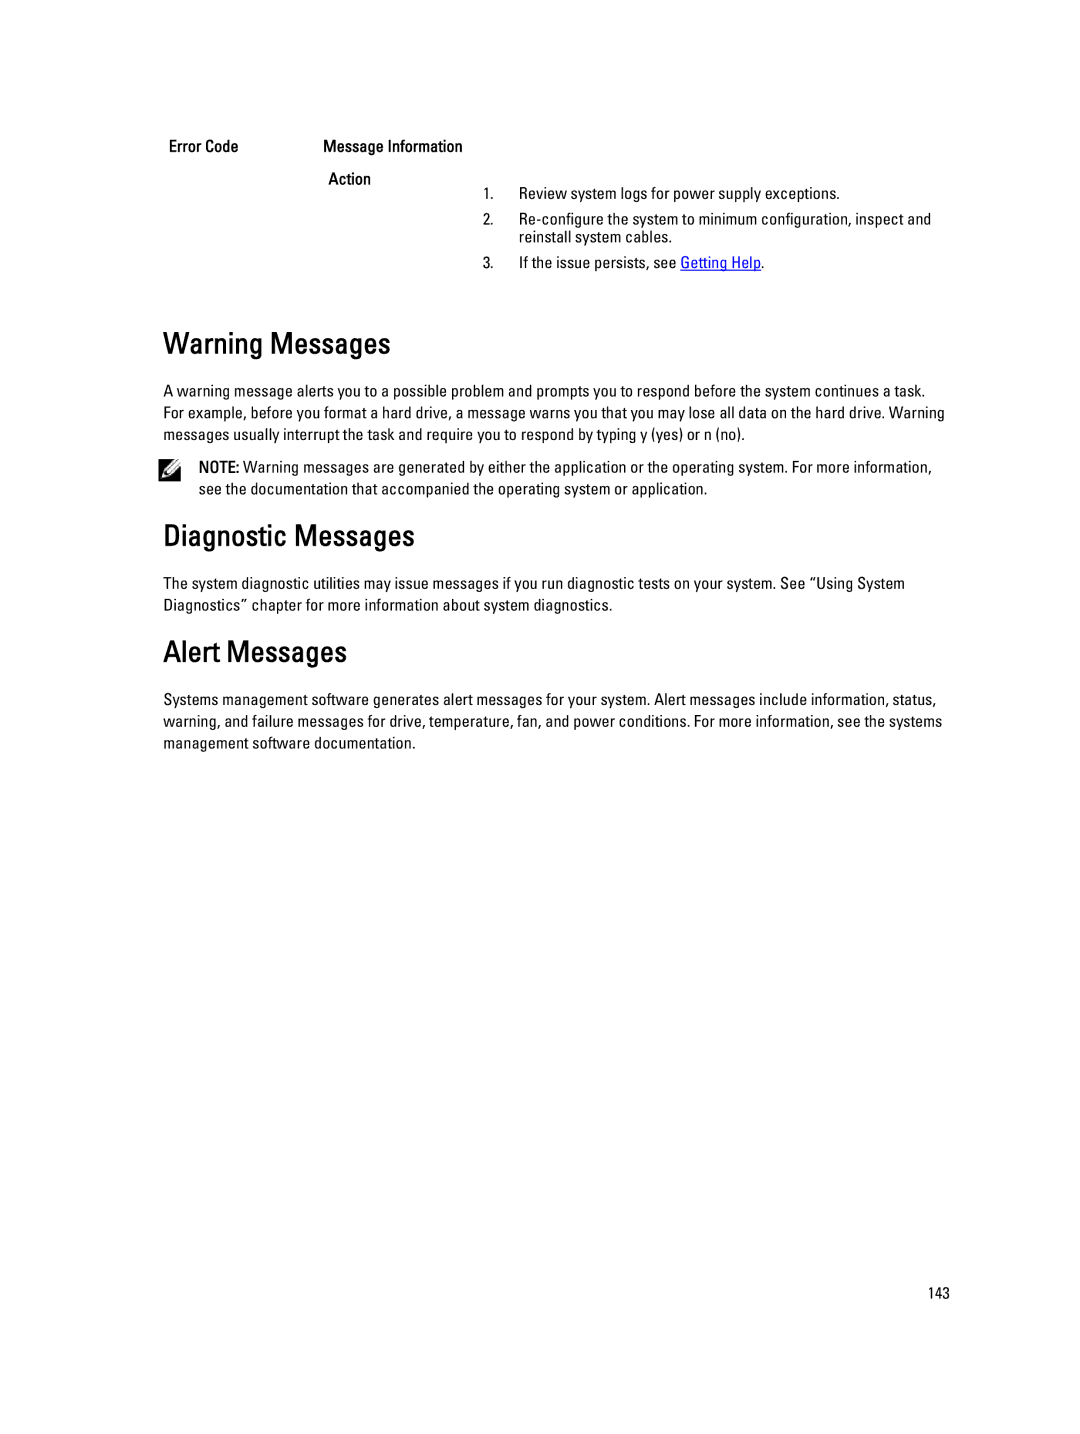 Dell E18S001, R420 owner manual Diagnostic Messages, Alert Messages 